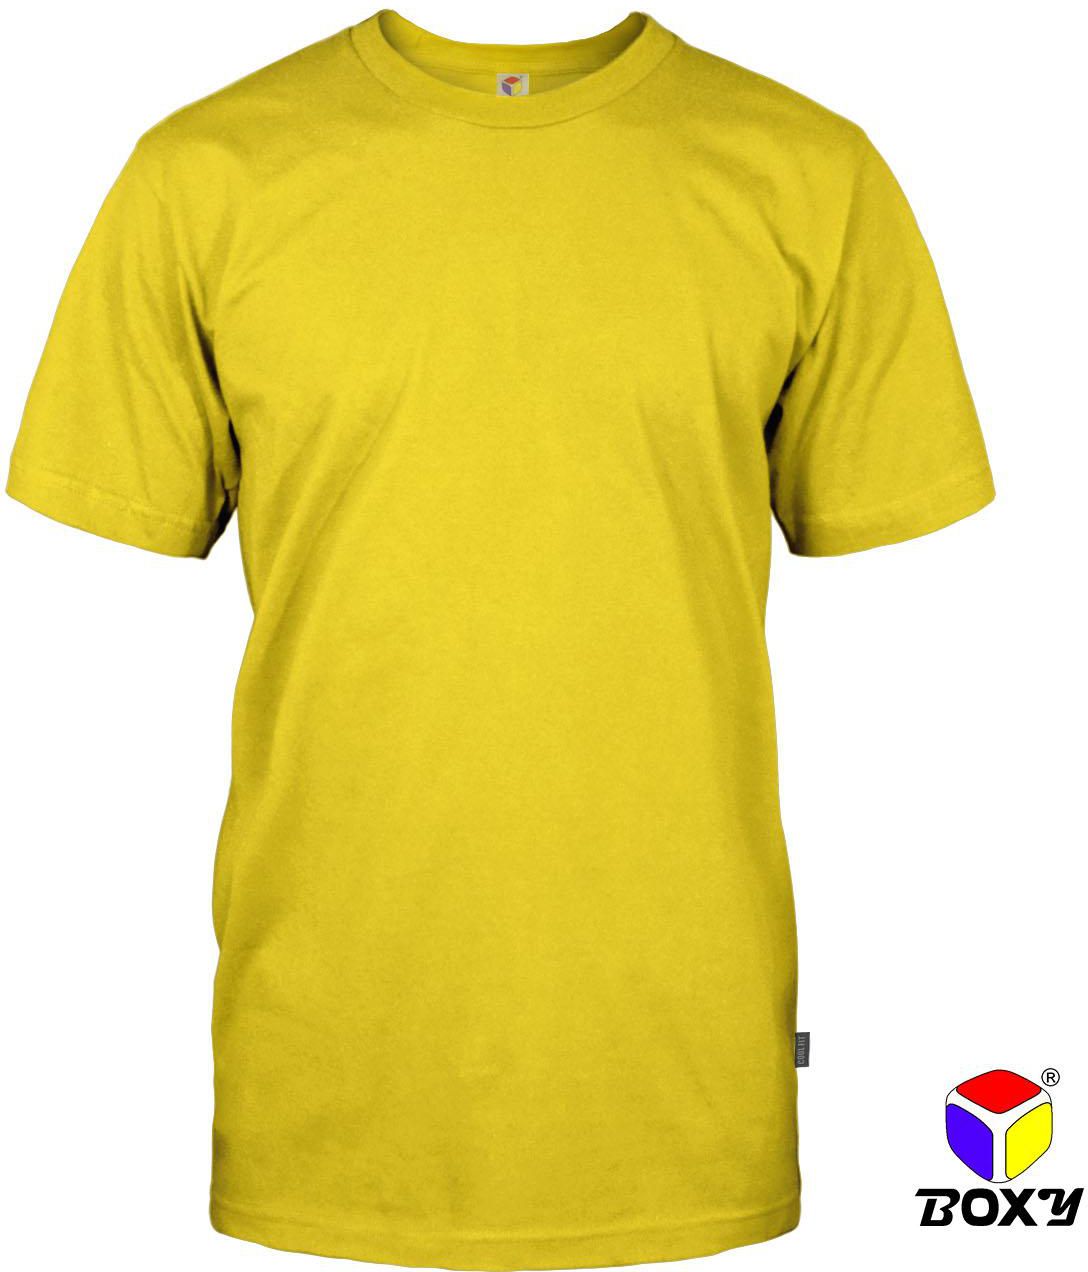 Boxy Microfiber Round Neck Plain T-shirt - 7 Sizes (Yellow)